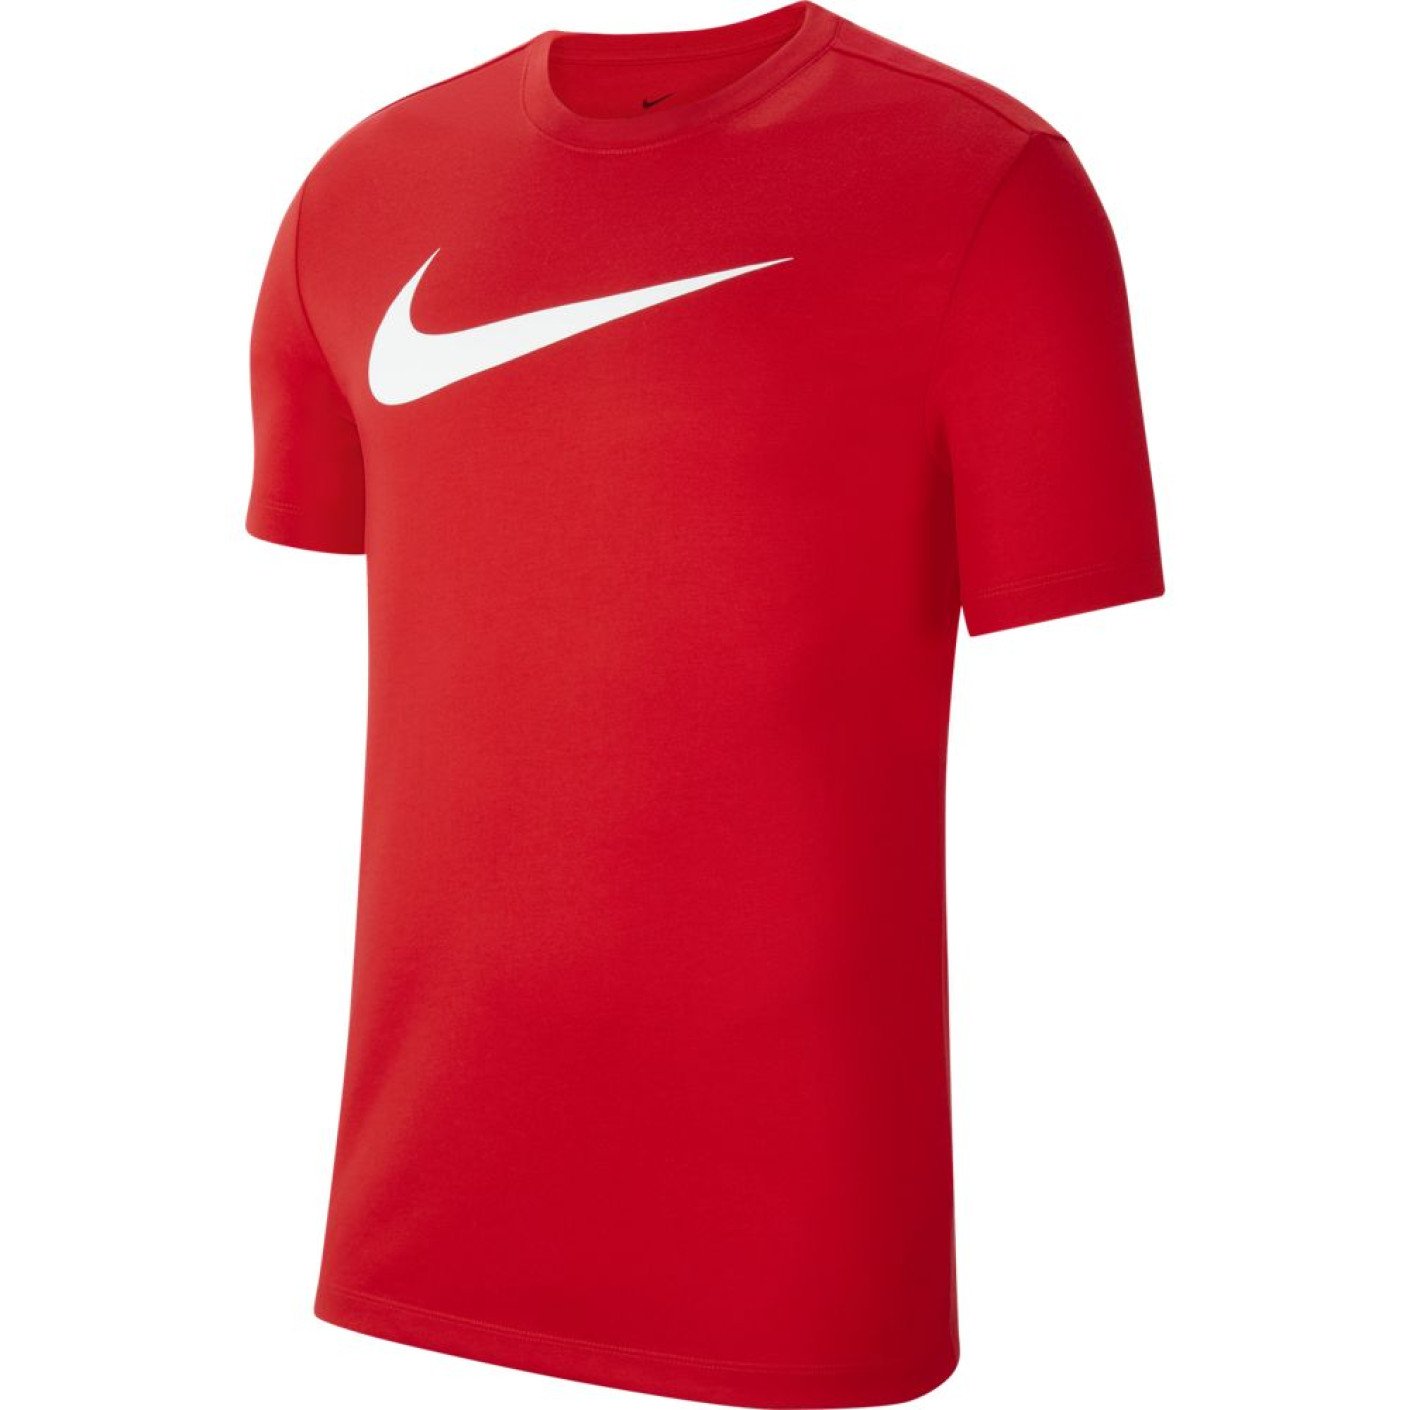 Nike Dry Park 20 T-Shirt Hybrid Rood